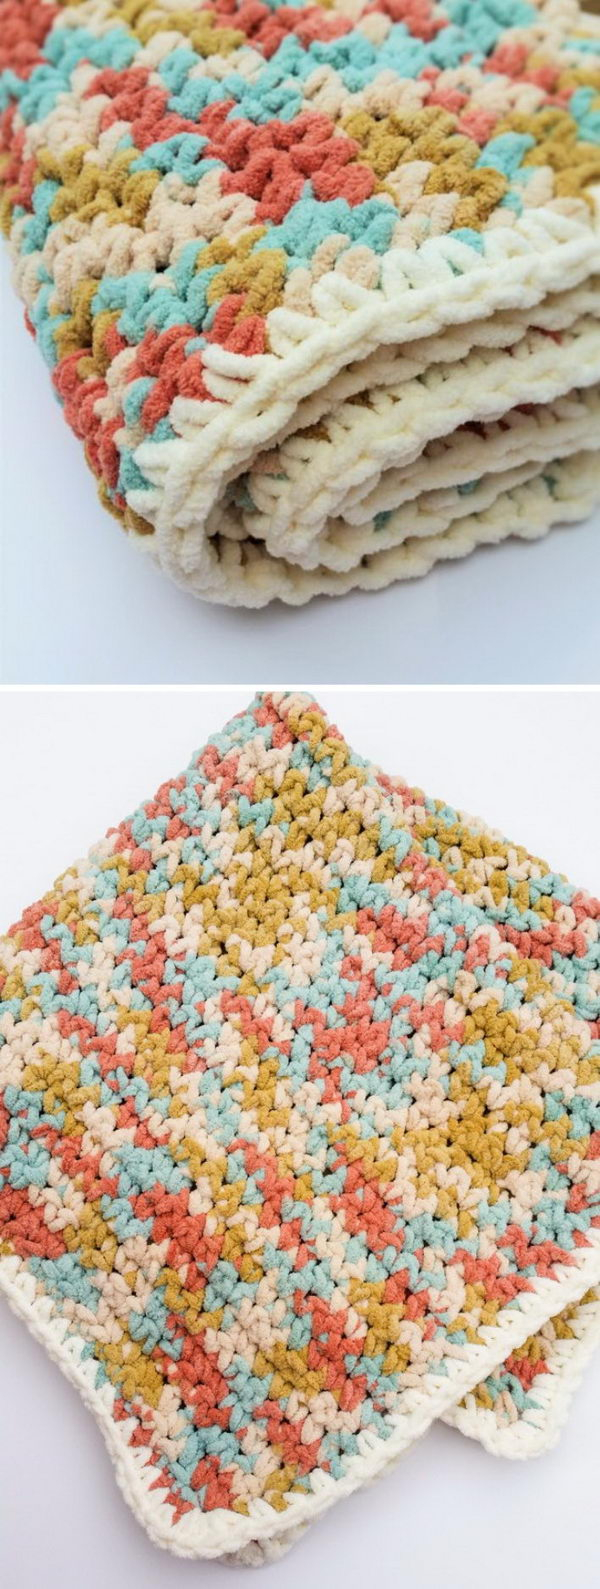 Crochet Blanket Pattern For Beginners 30 Free Crochet Patterns For Blankets Hative